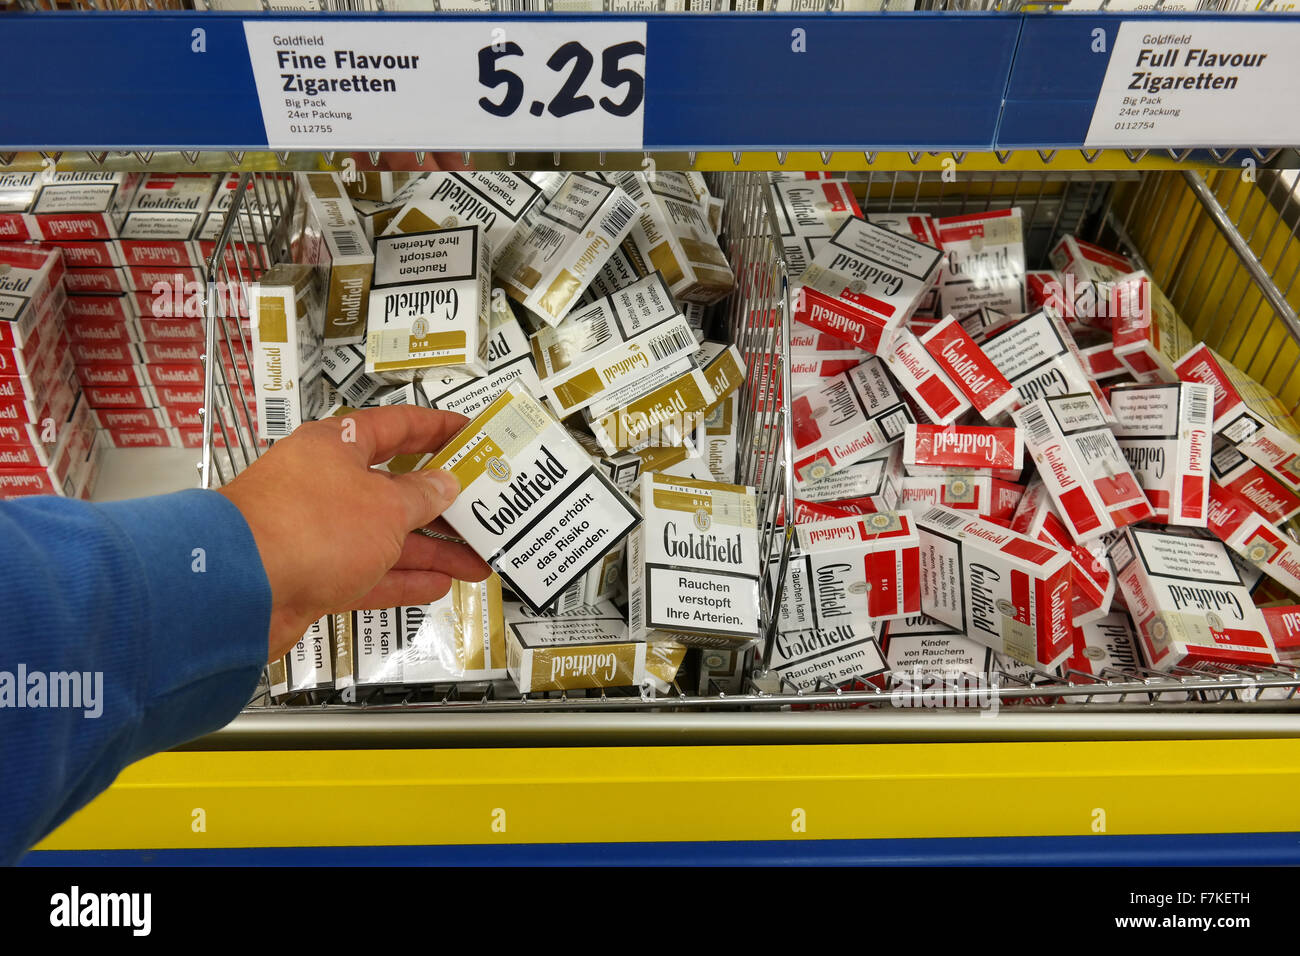 Cigarettes - Tesco Groceries